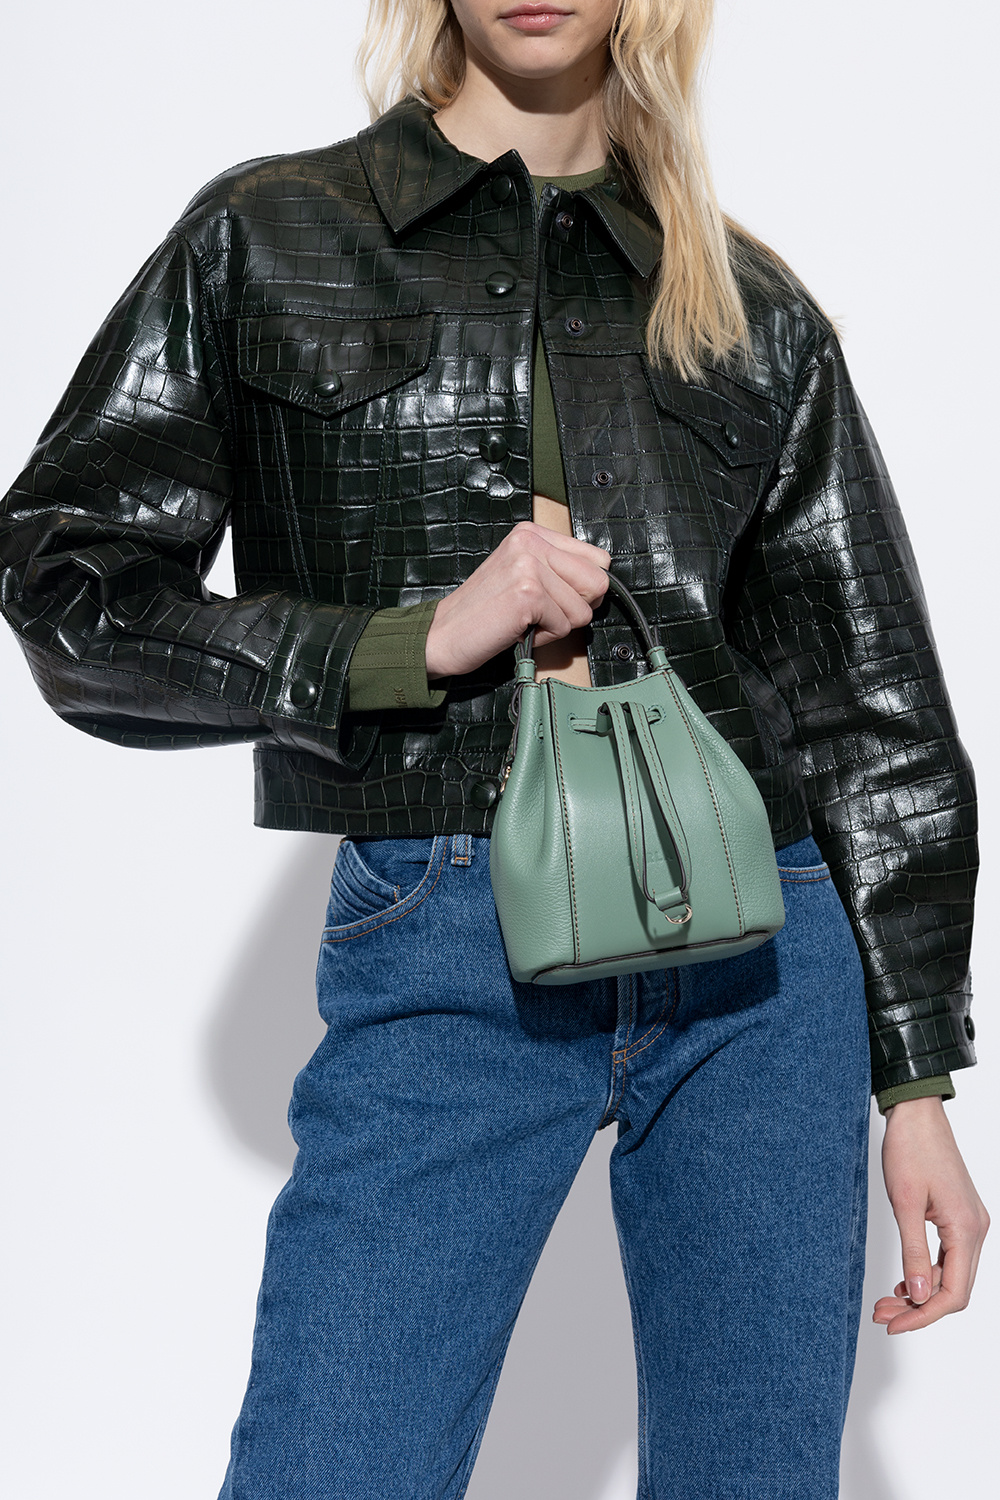 Furla 'Miastella Mini' bucket bag, Women's Bags